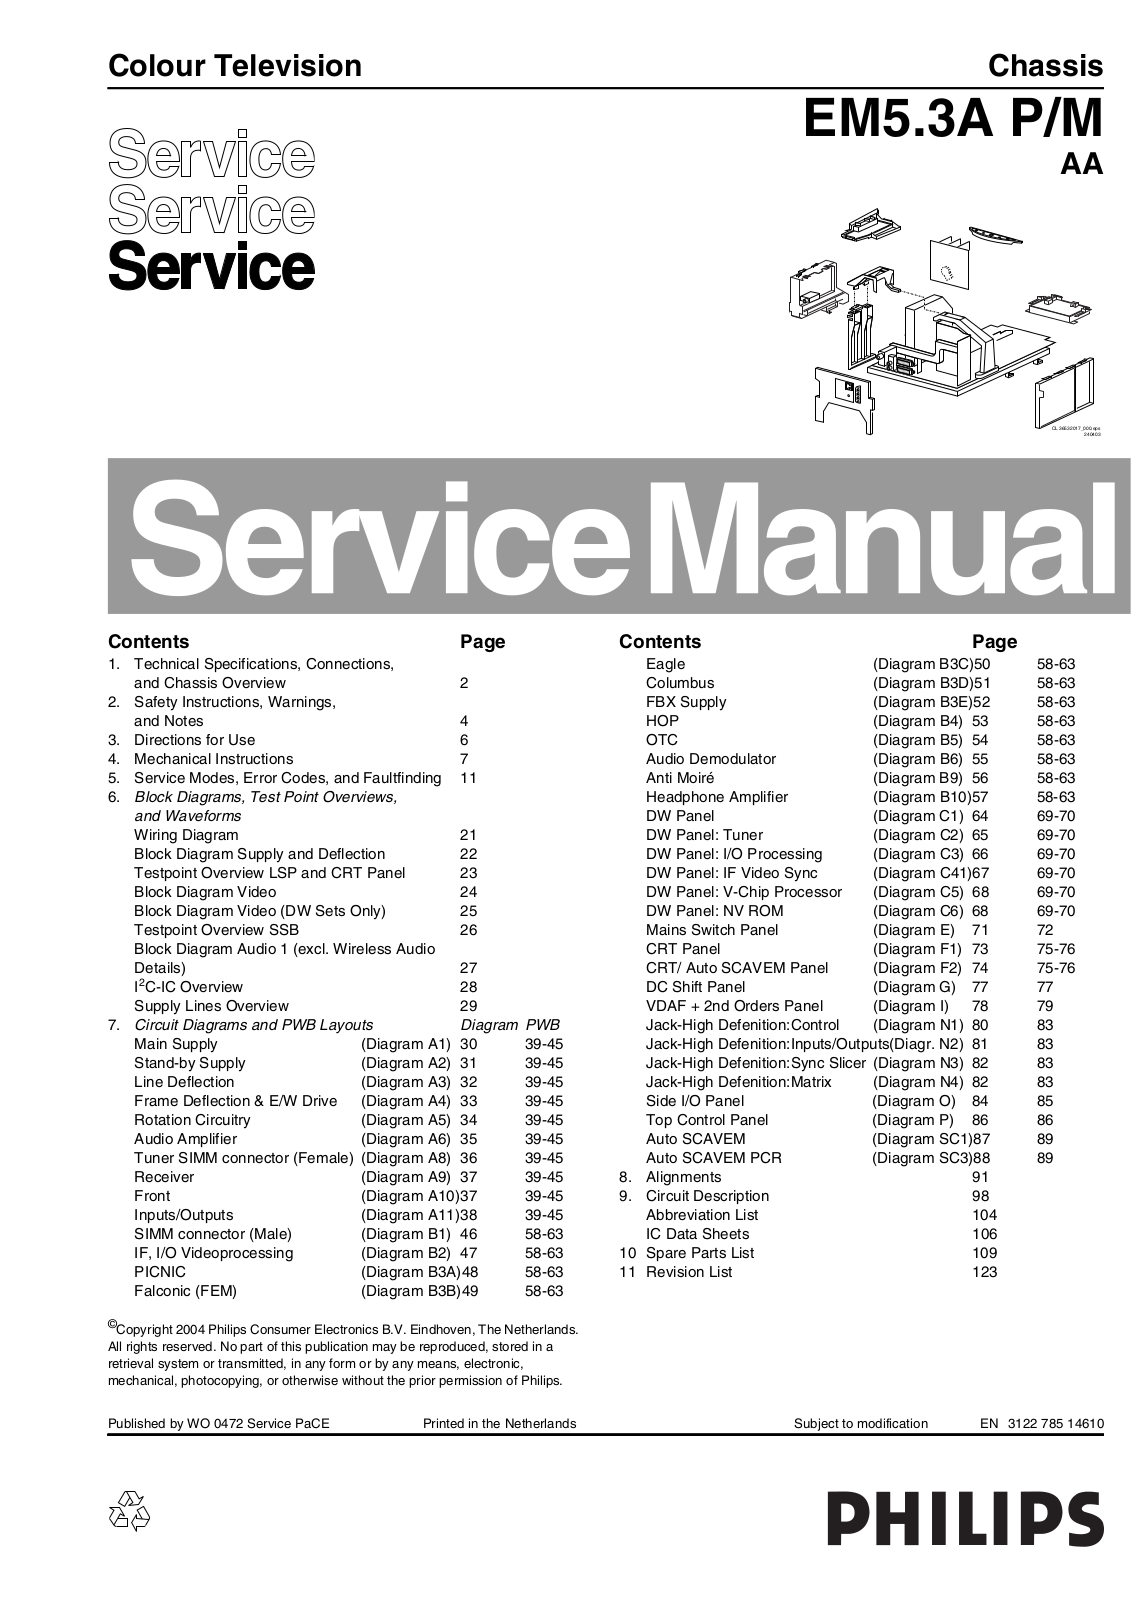 Philips EM5.3A P-M AA Service Manual